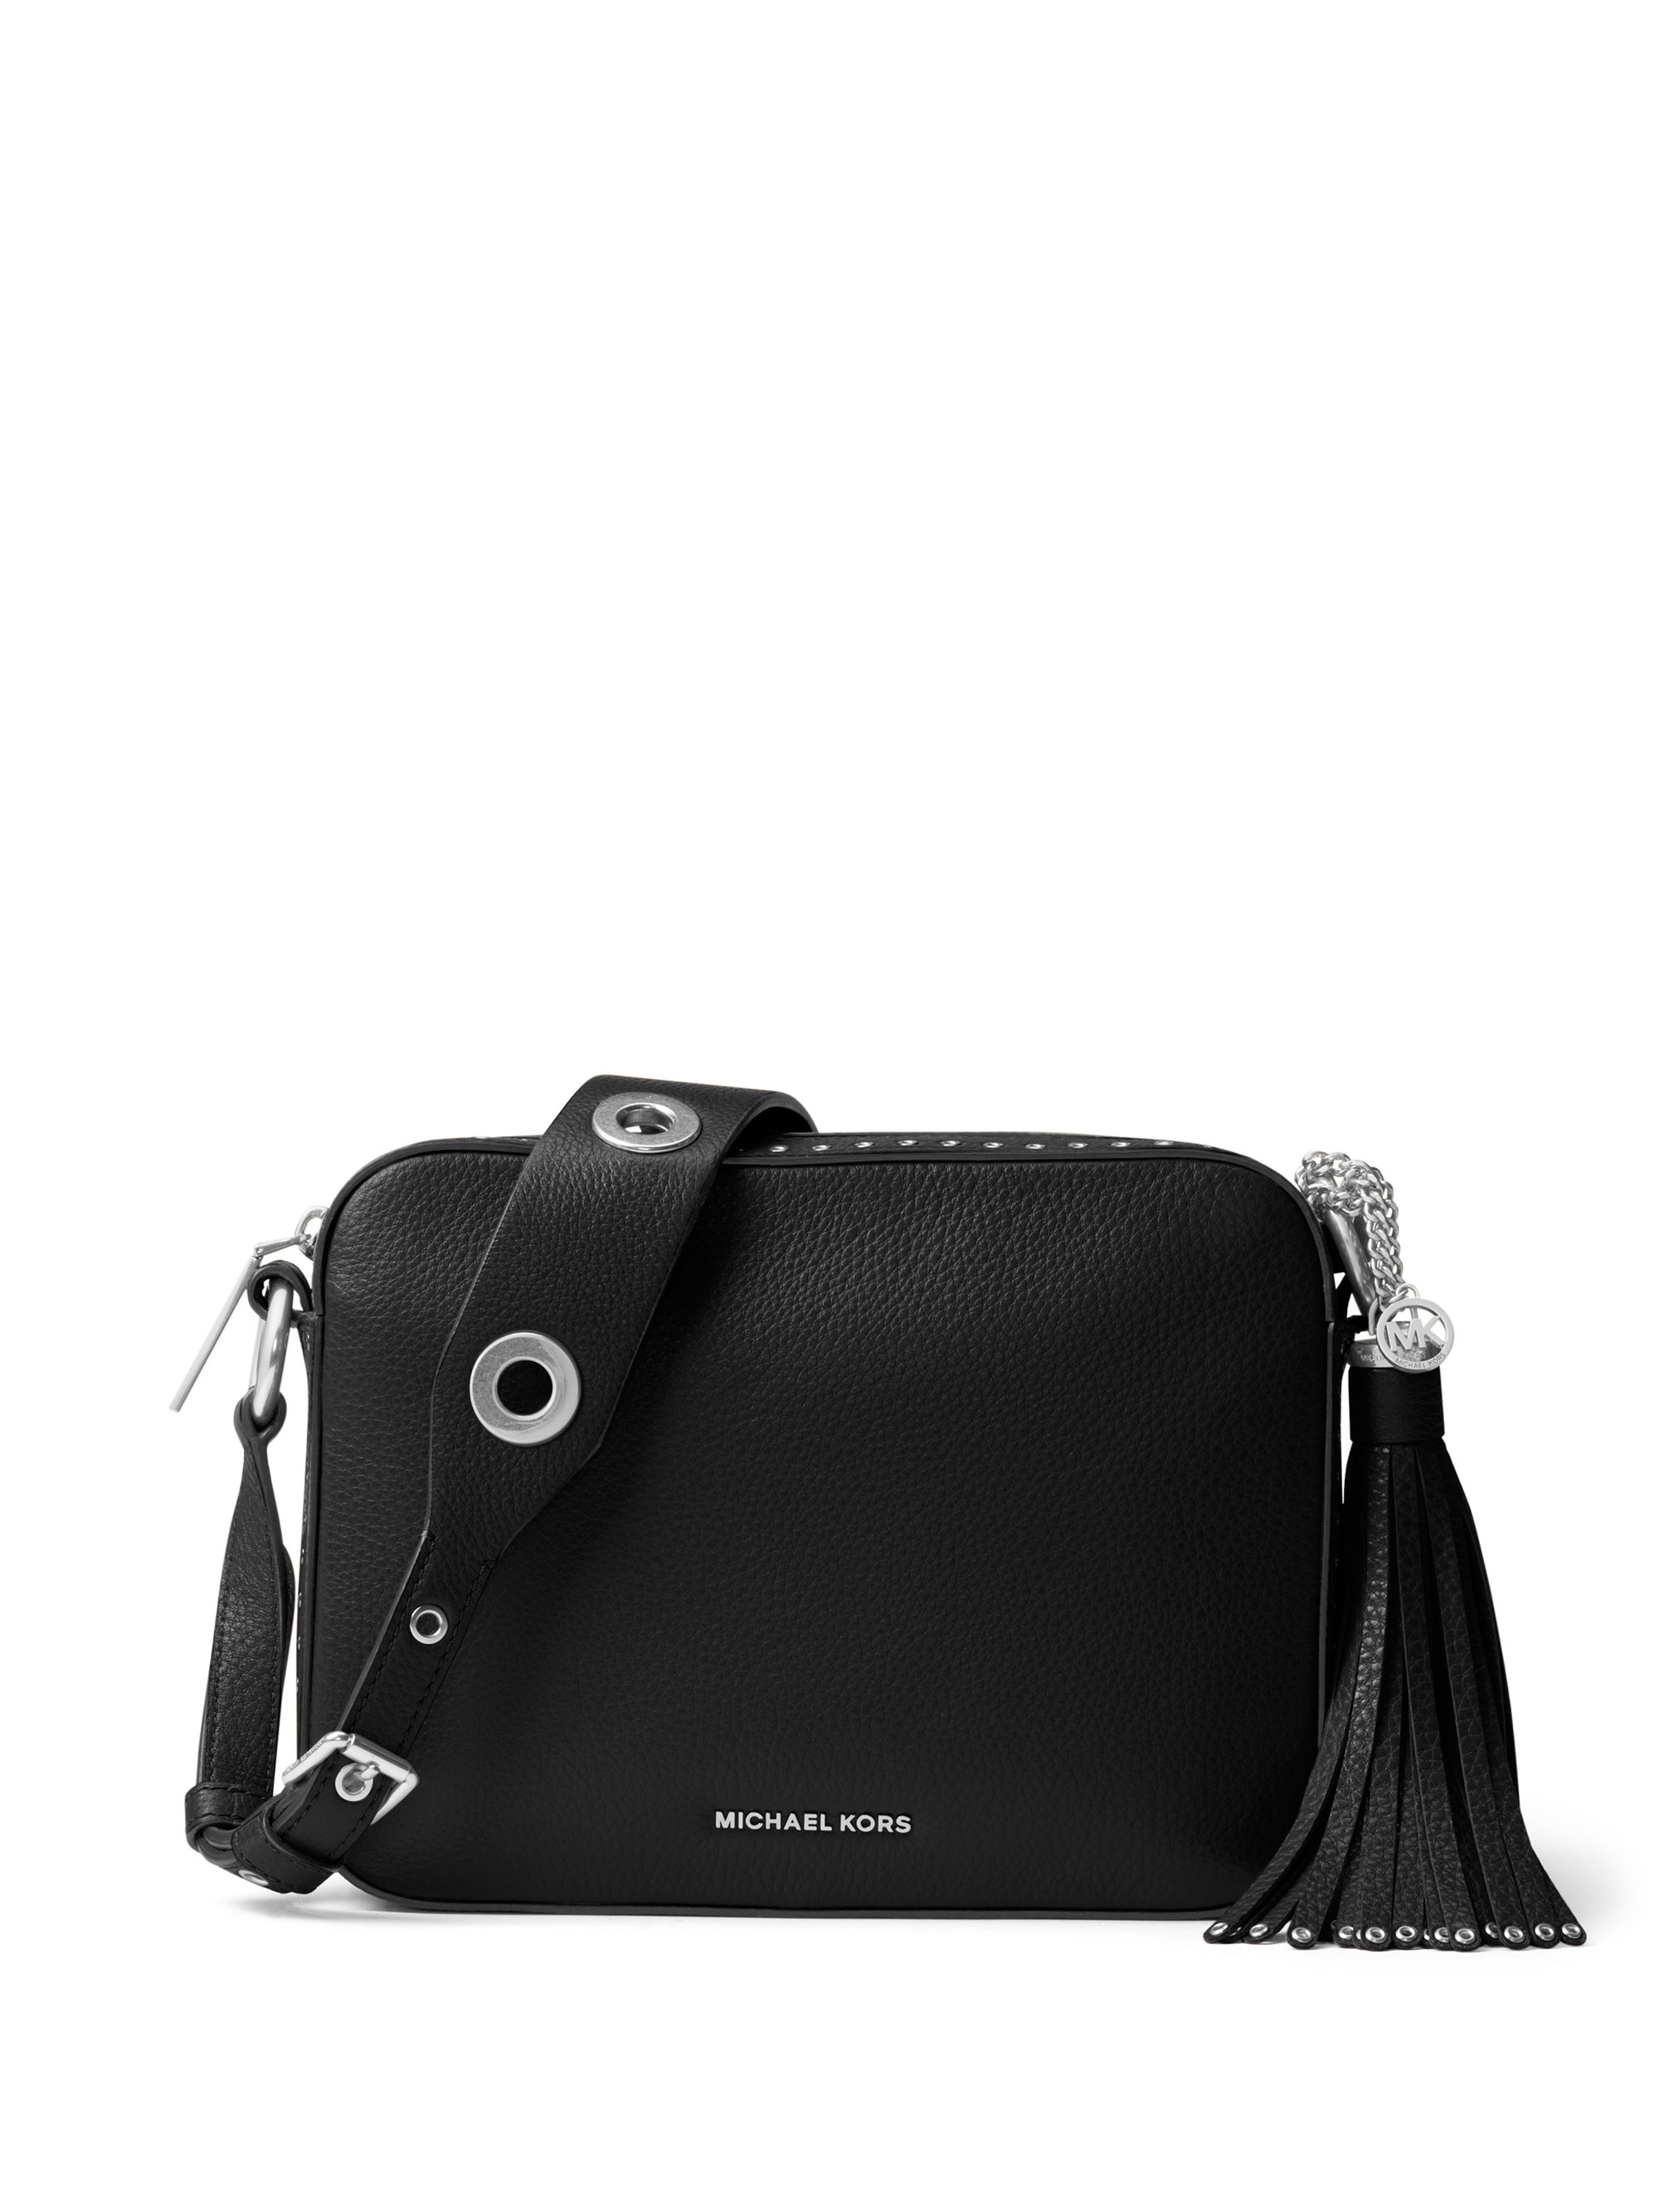 Lyst - Michael Kors Brooklyn Large Leather Camera Bag in Black